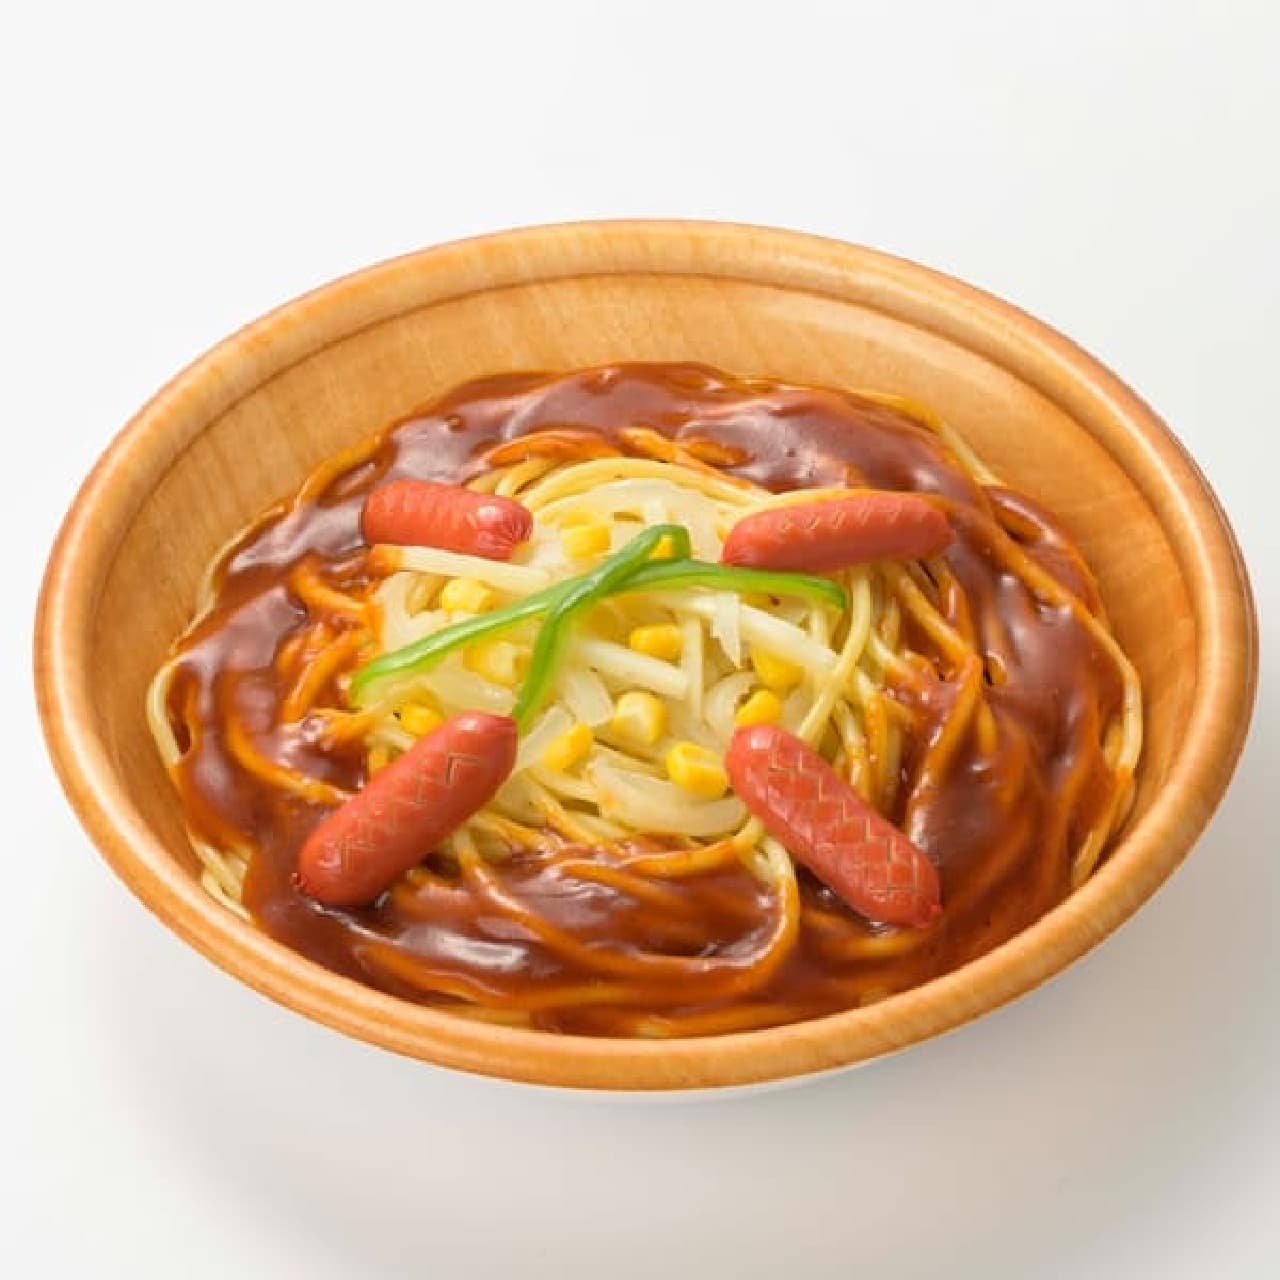 FamilyMart "Ankake Spaghetti Mirakan under the supervision of Chao" in Tokai region